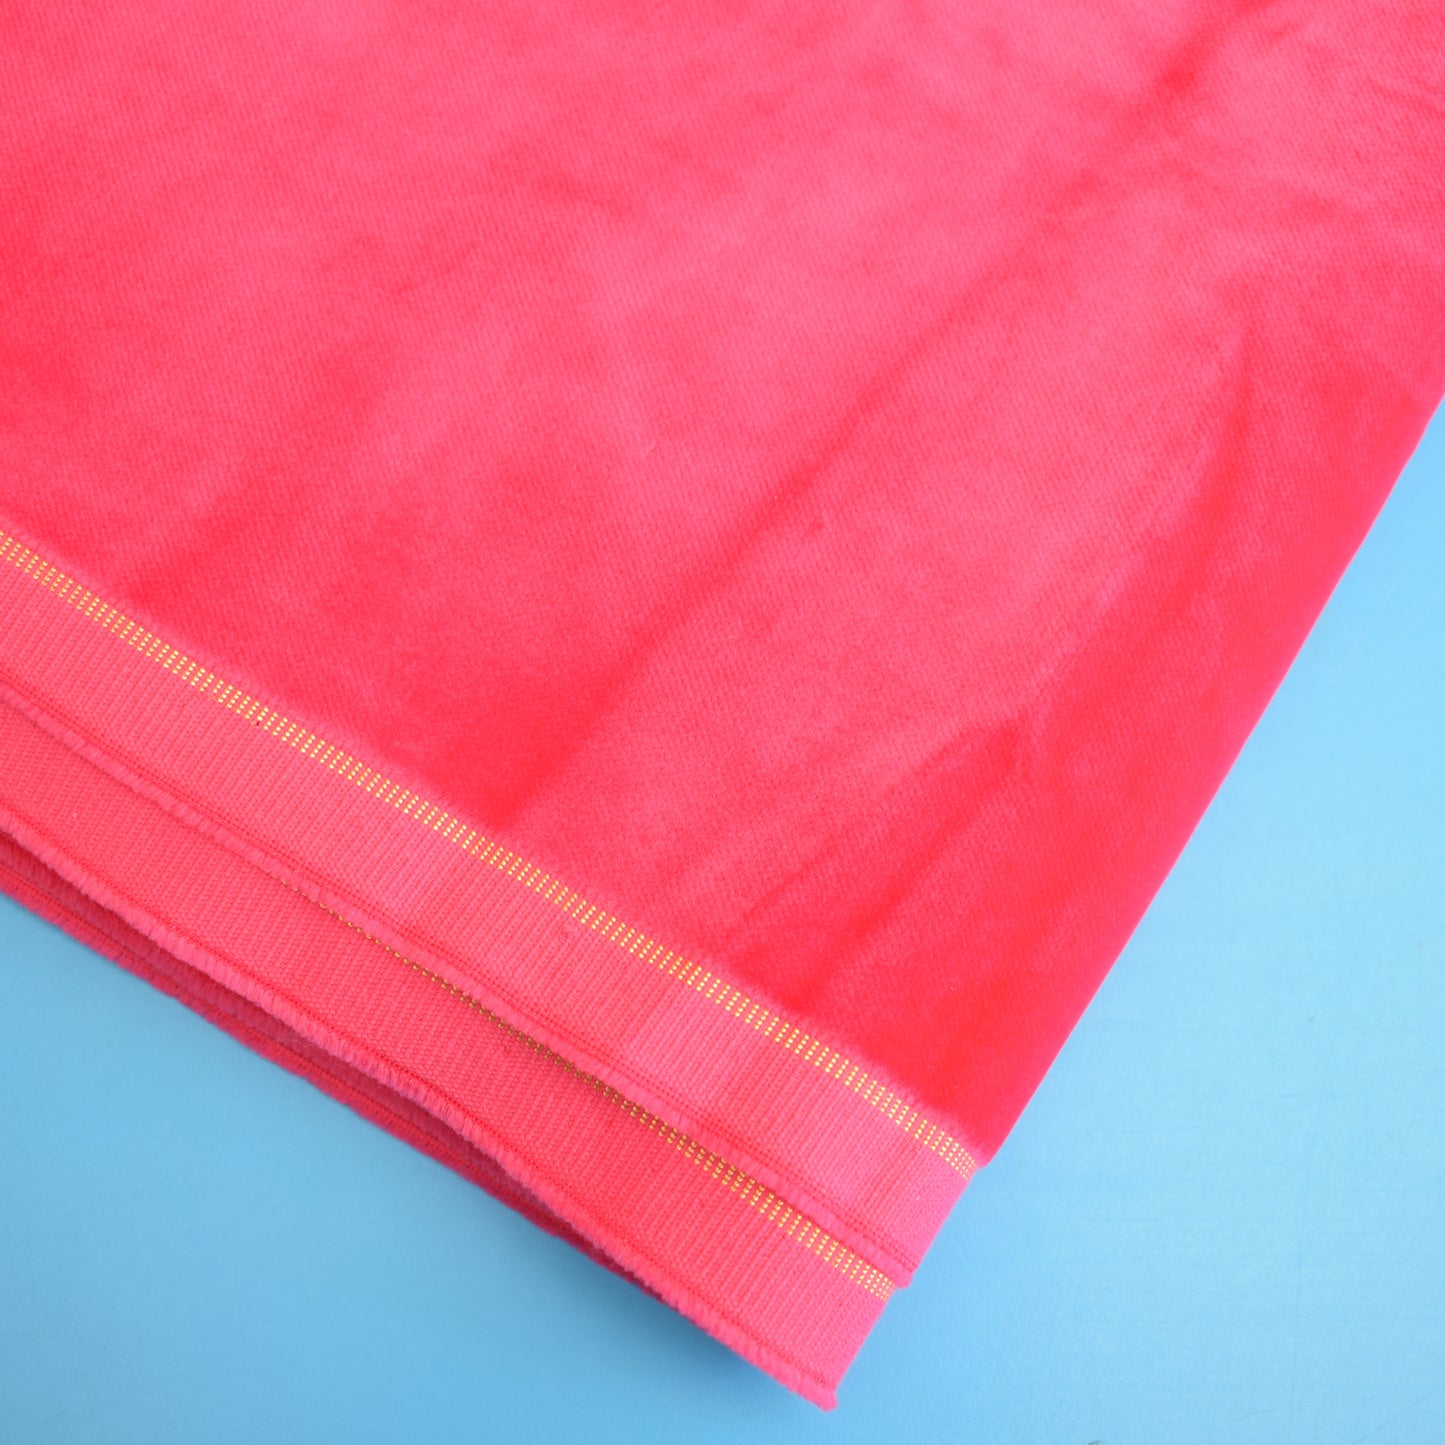 Vintage 1960s Quality Cotton Velvet Fabric - Hot Pink